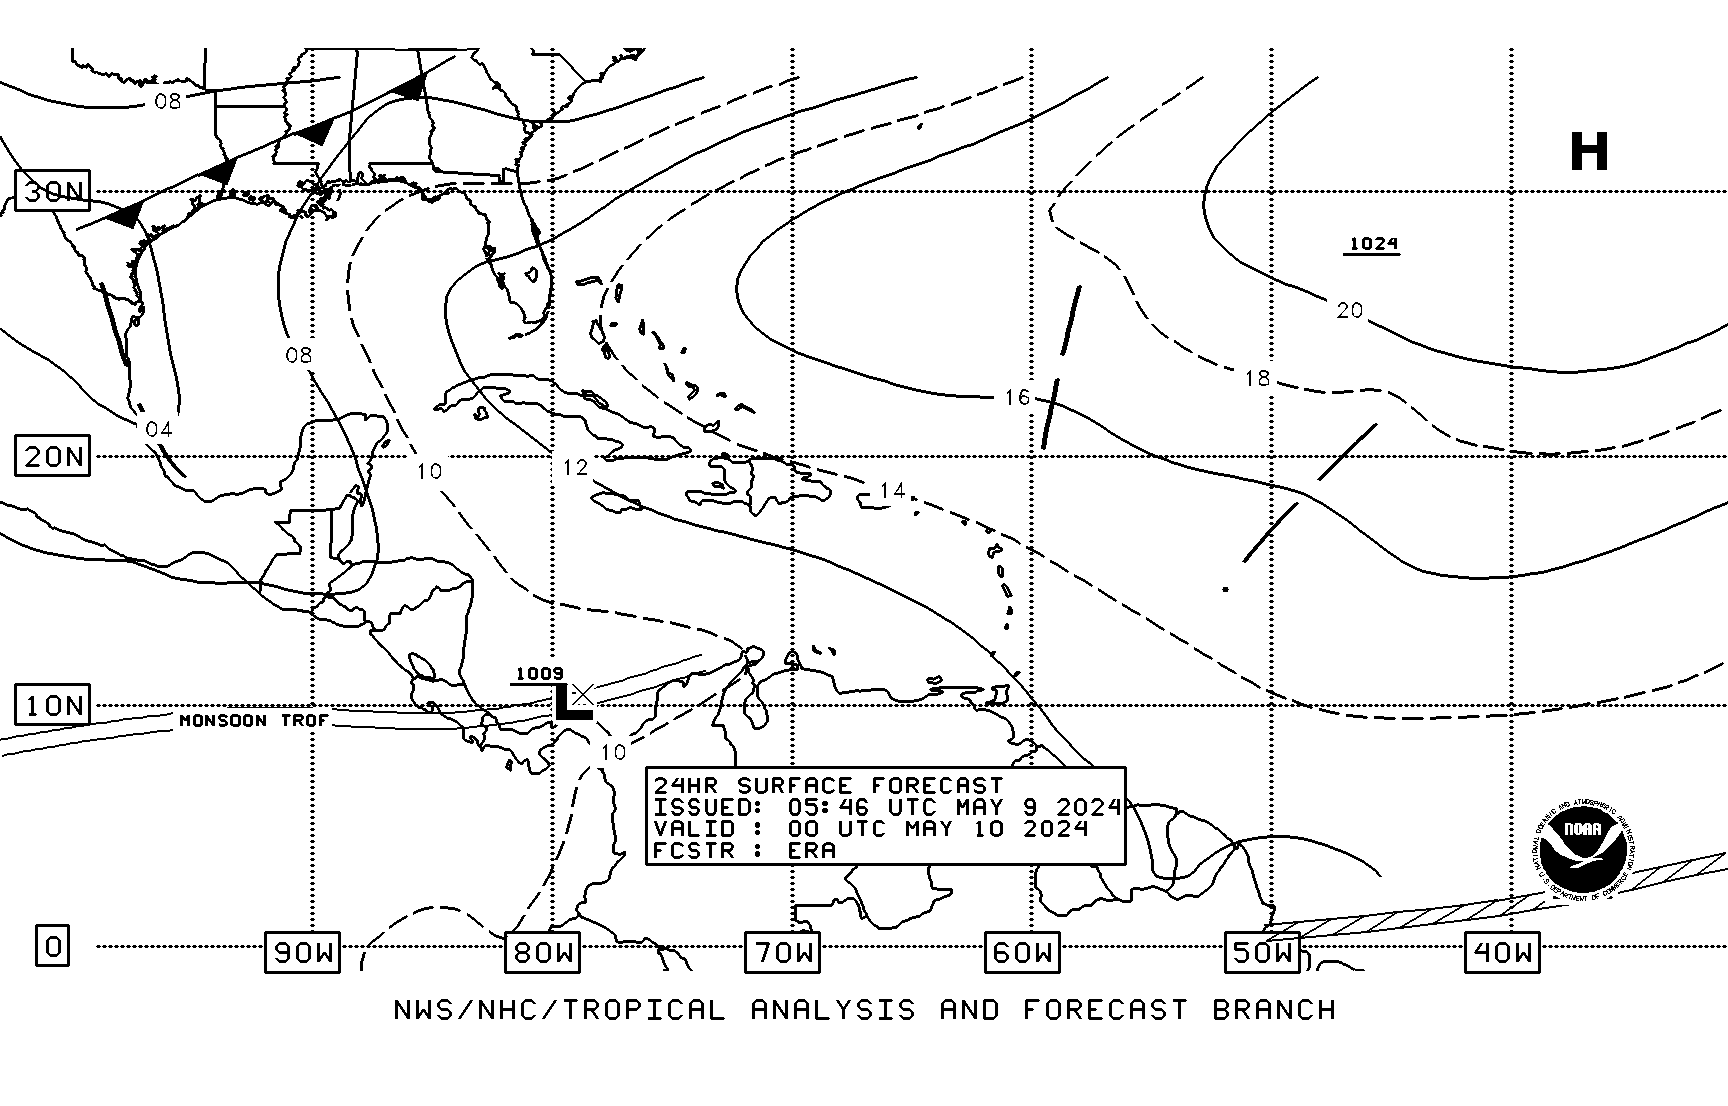 24 hour Tropical Atlantic surface